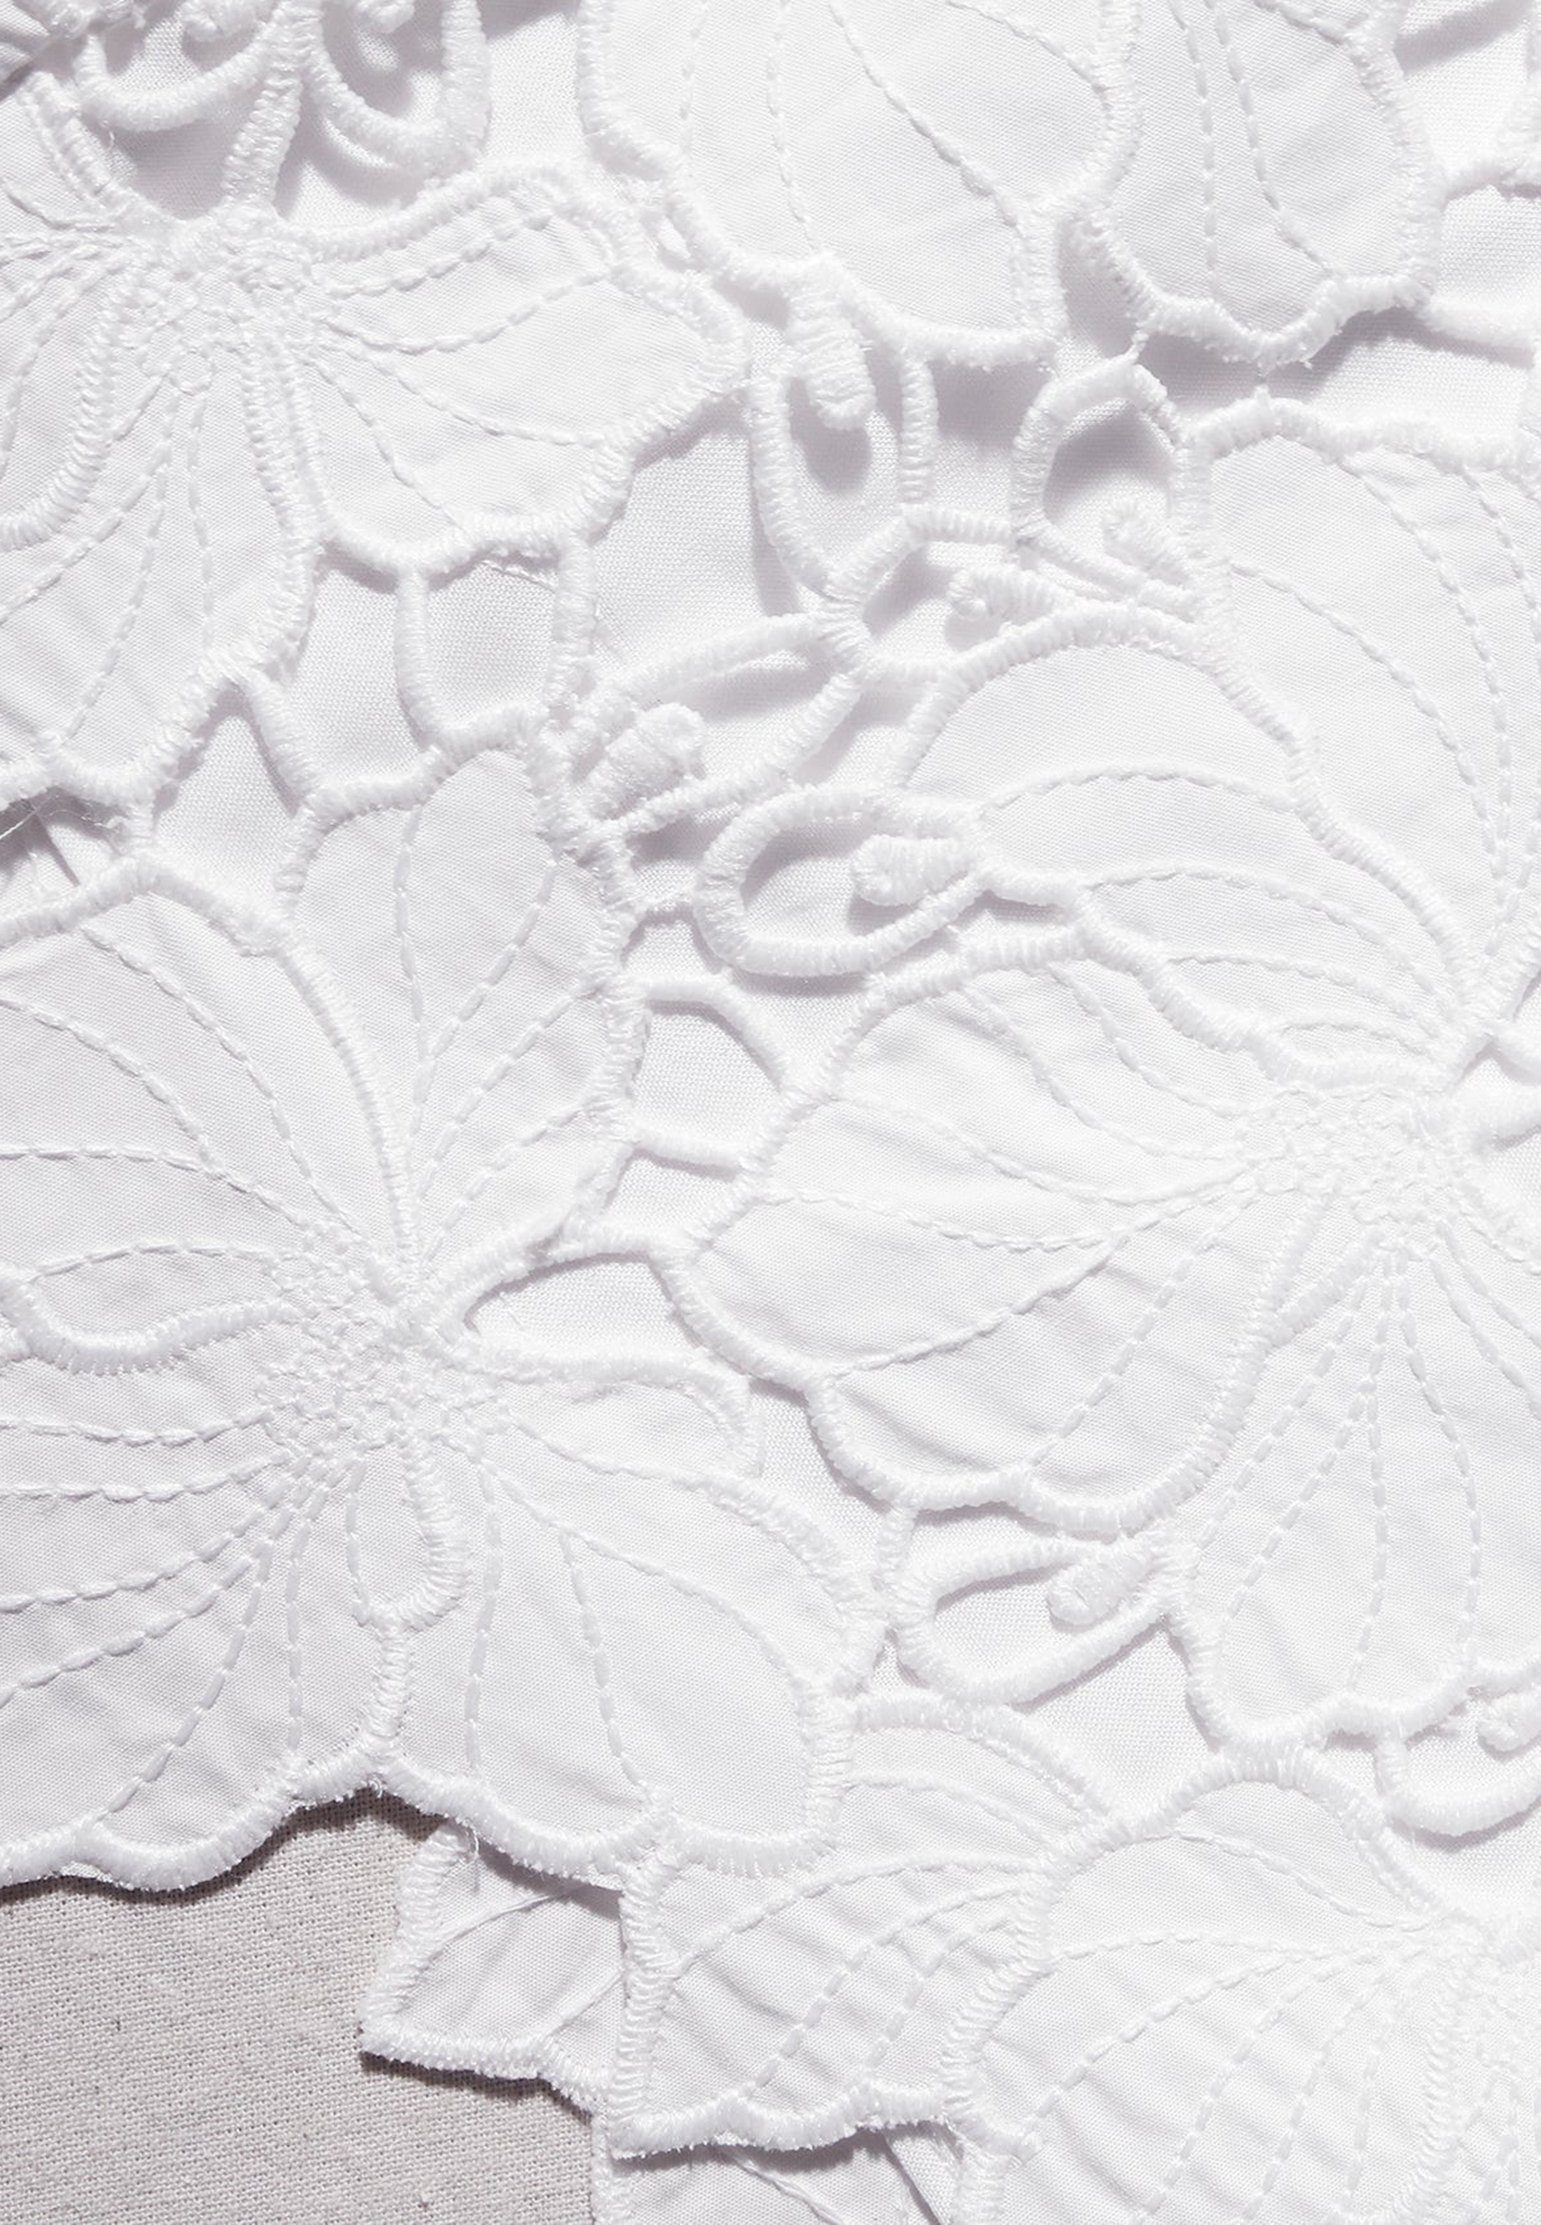 Shorts SELF-PORTRAIT Color: white (Code: 1772) in online store Allure